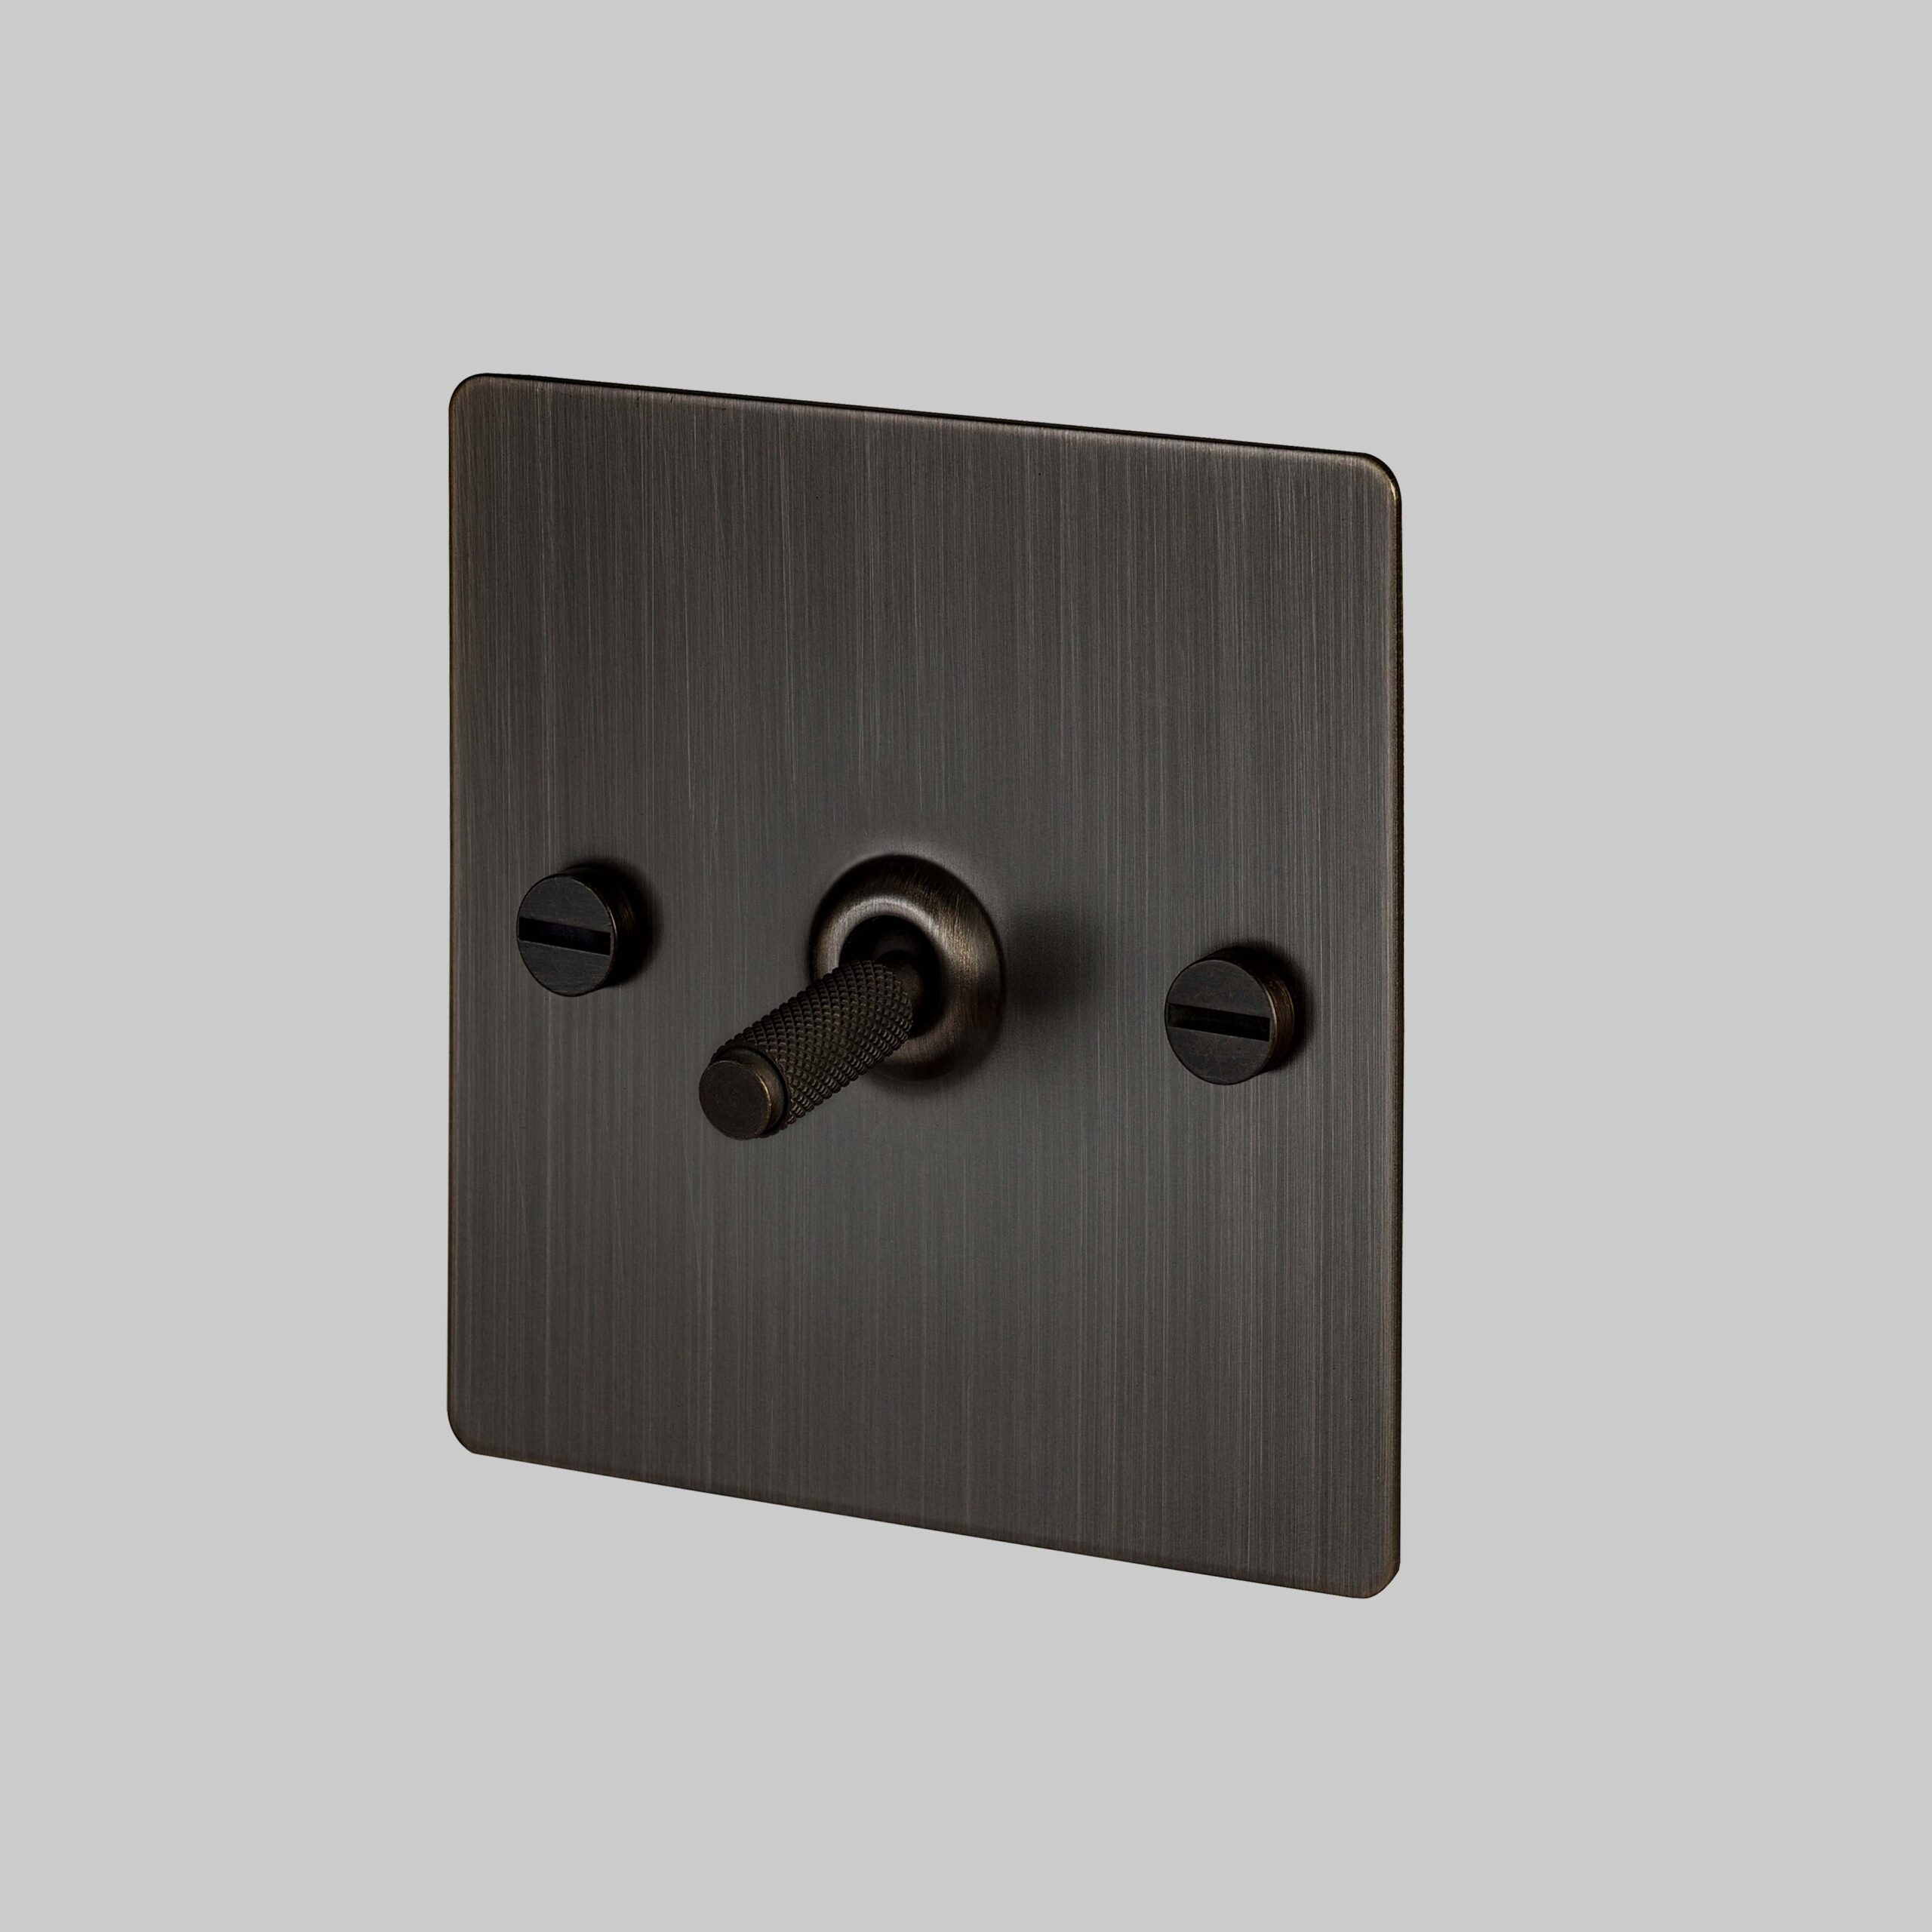 1g-intermediate-toggle-switch-smoked-bronze-plate